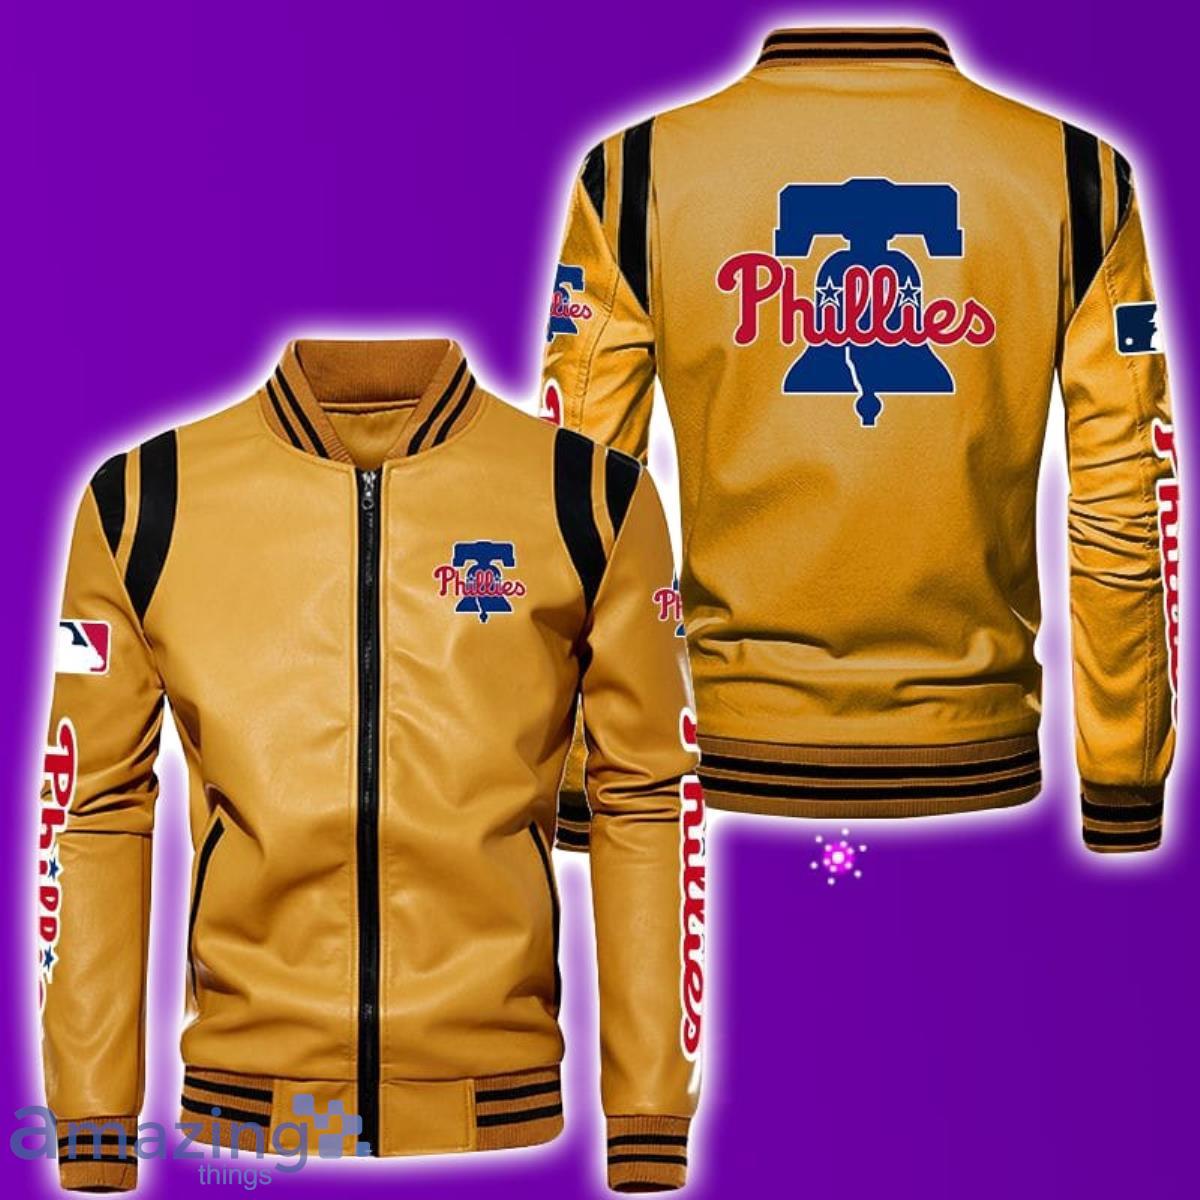 Philadelphia Phillies Leather Bomber Jacket Best Gift For Men And